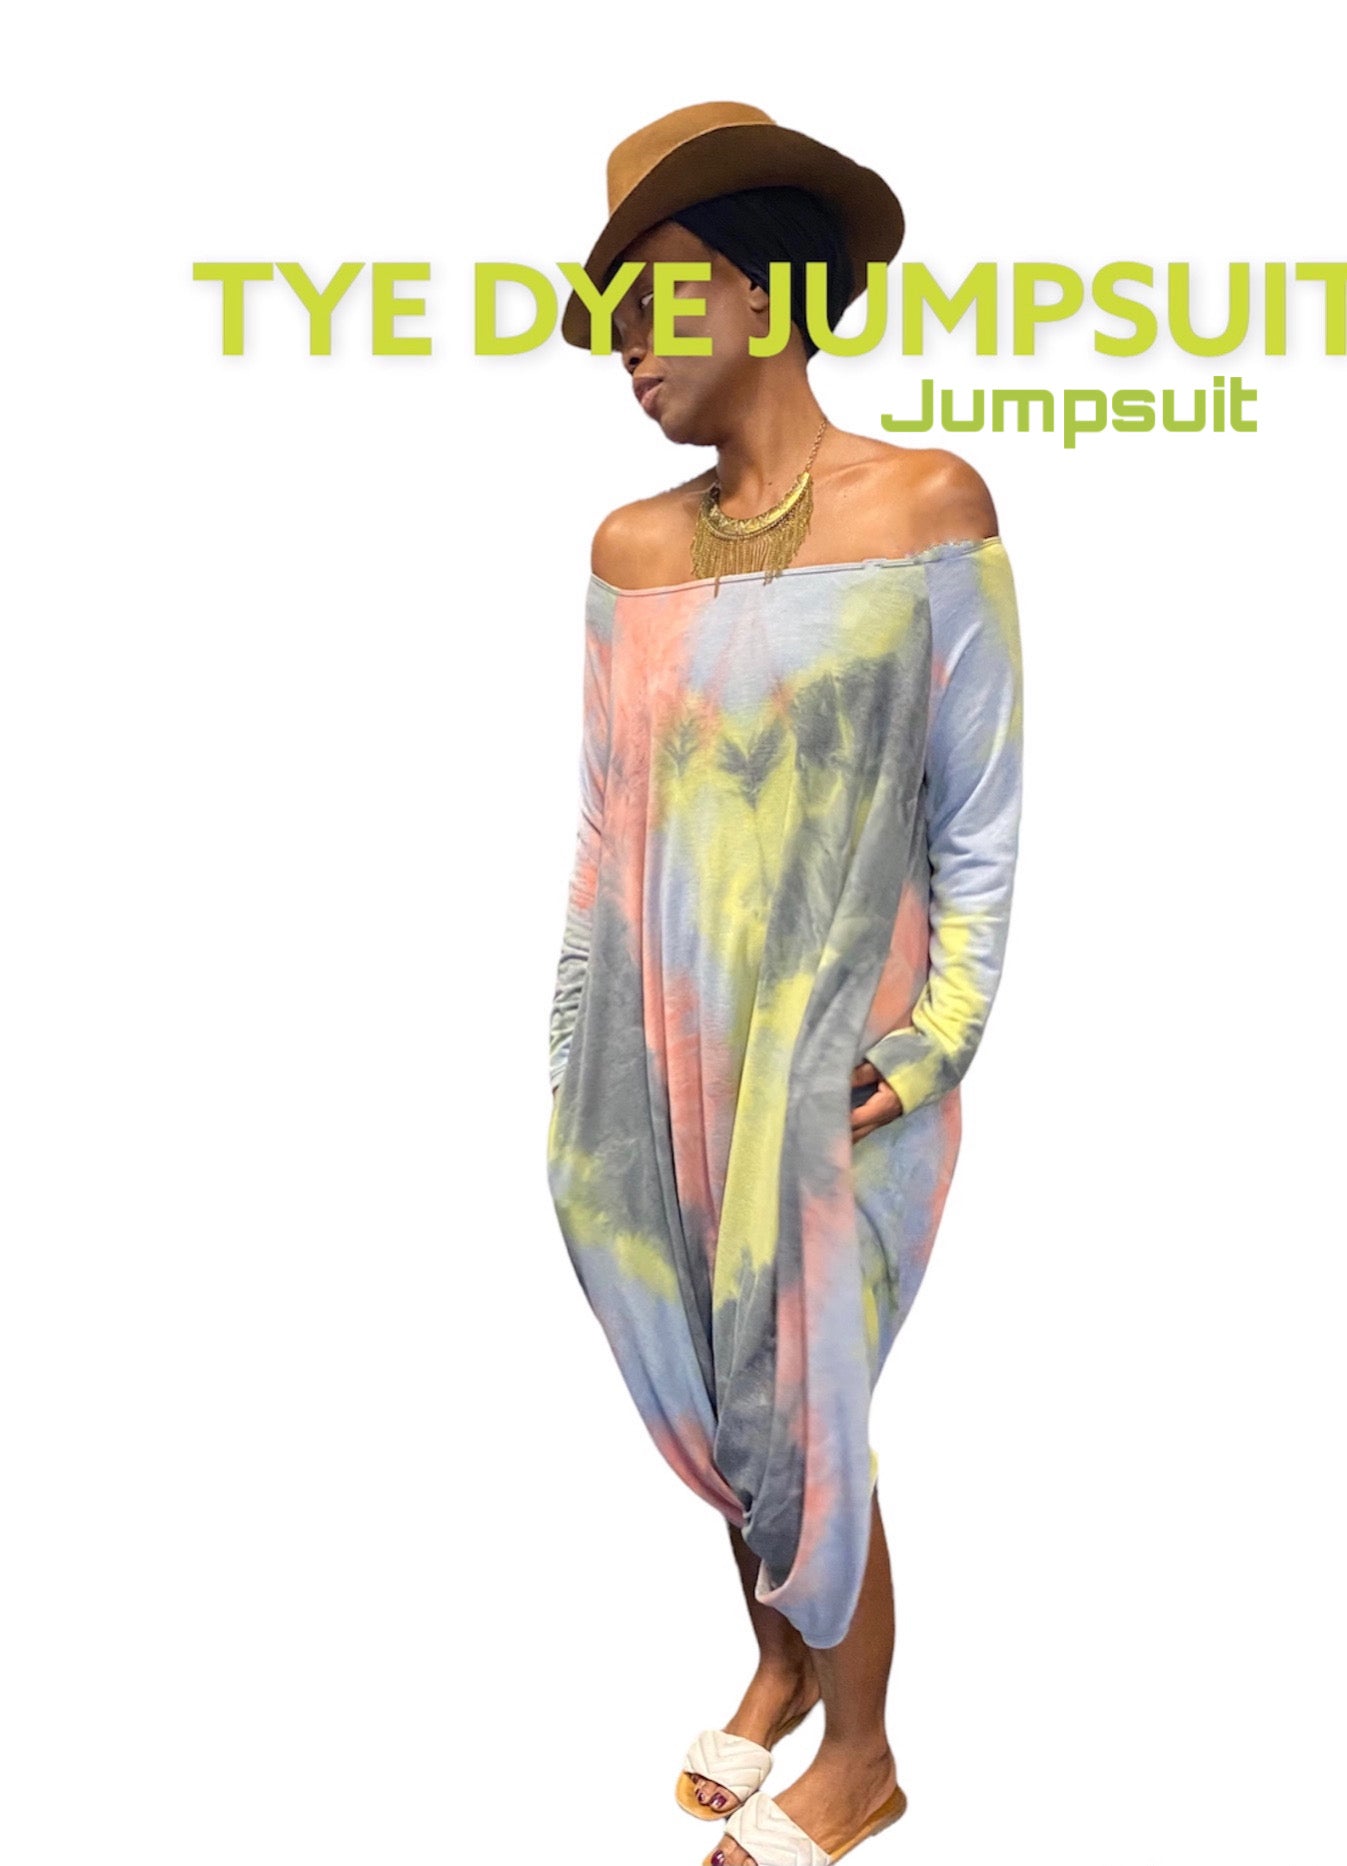 The Ultimate Jumpsuit - Tye-Dye Jumpsuit